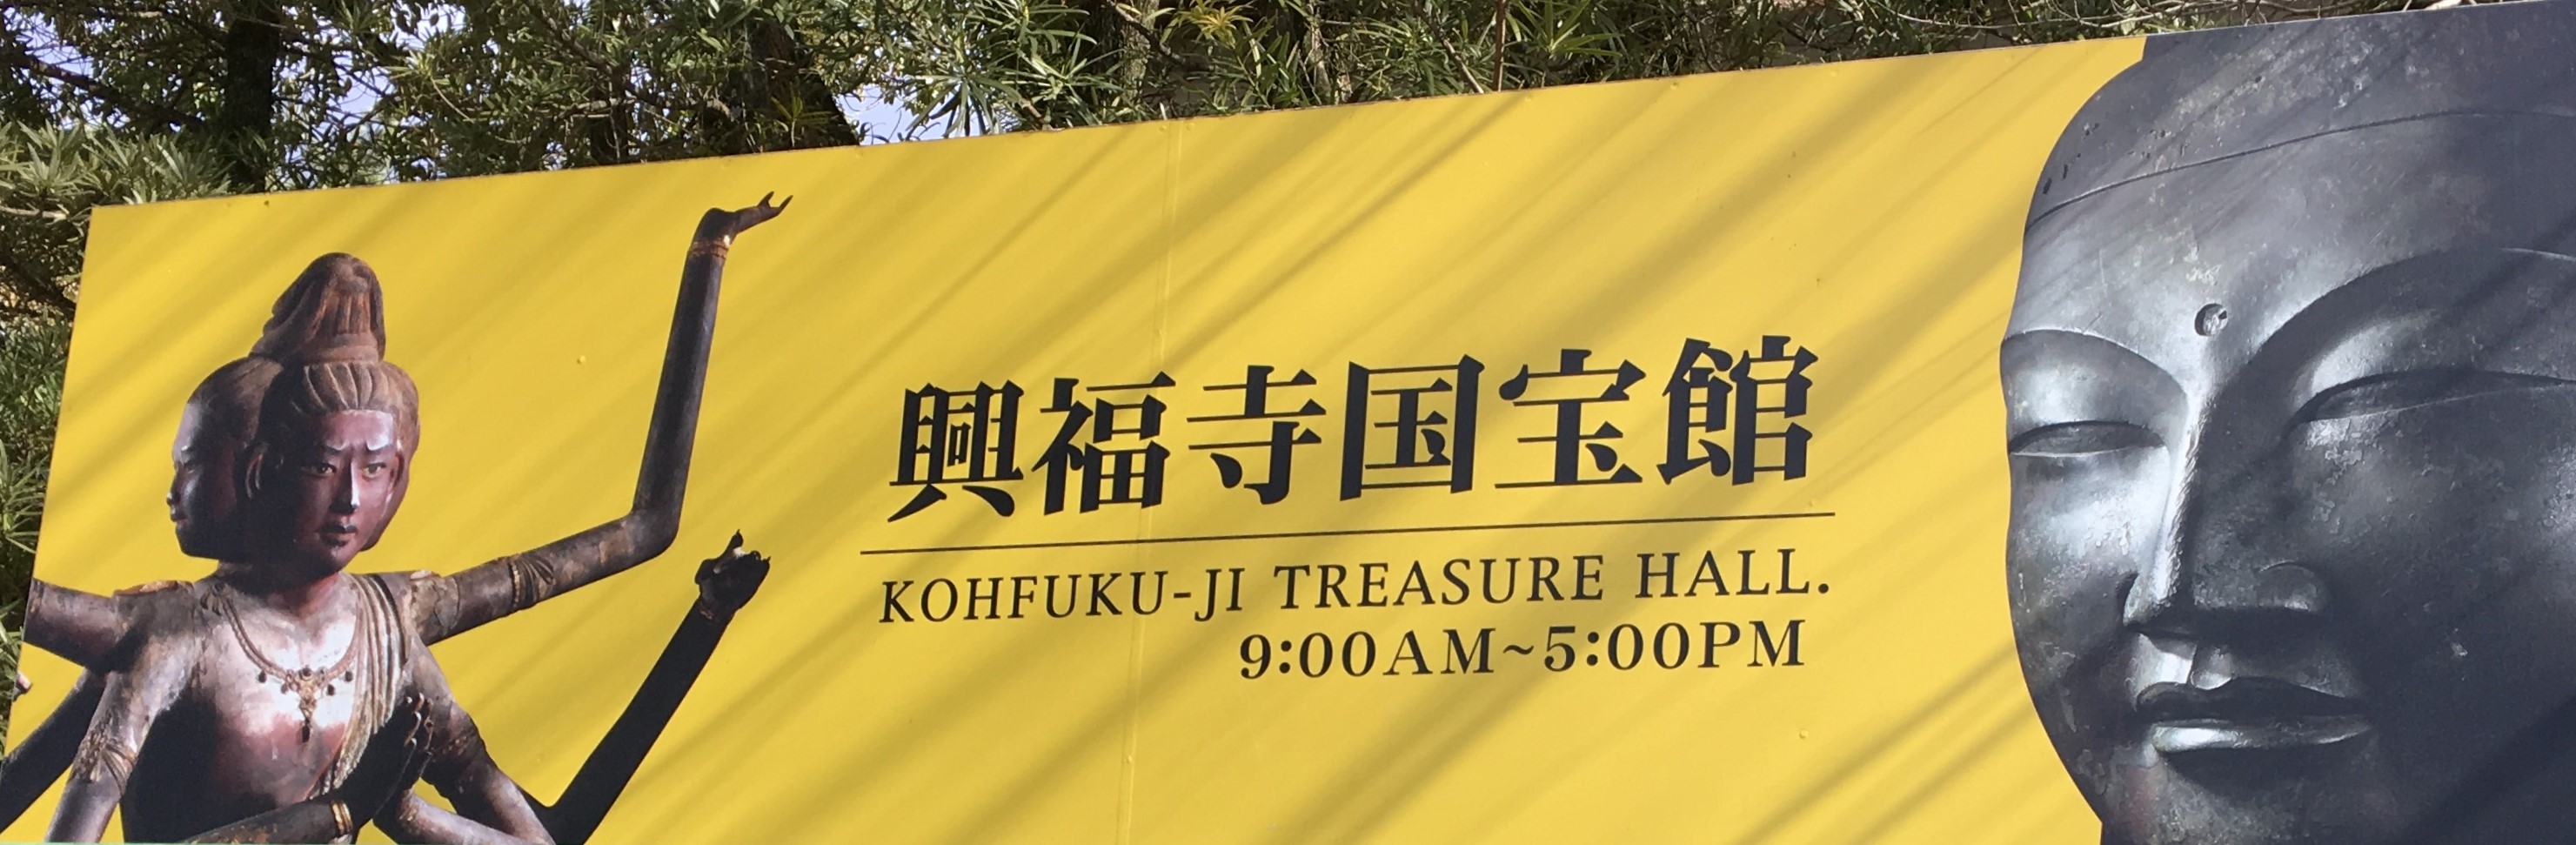 bright yellow board with the hours for kofukuji's treasure hall 